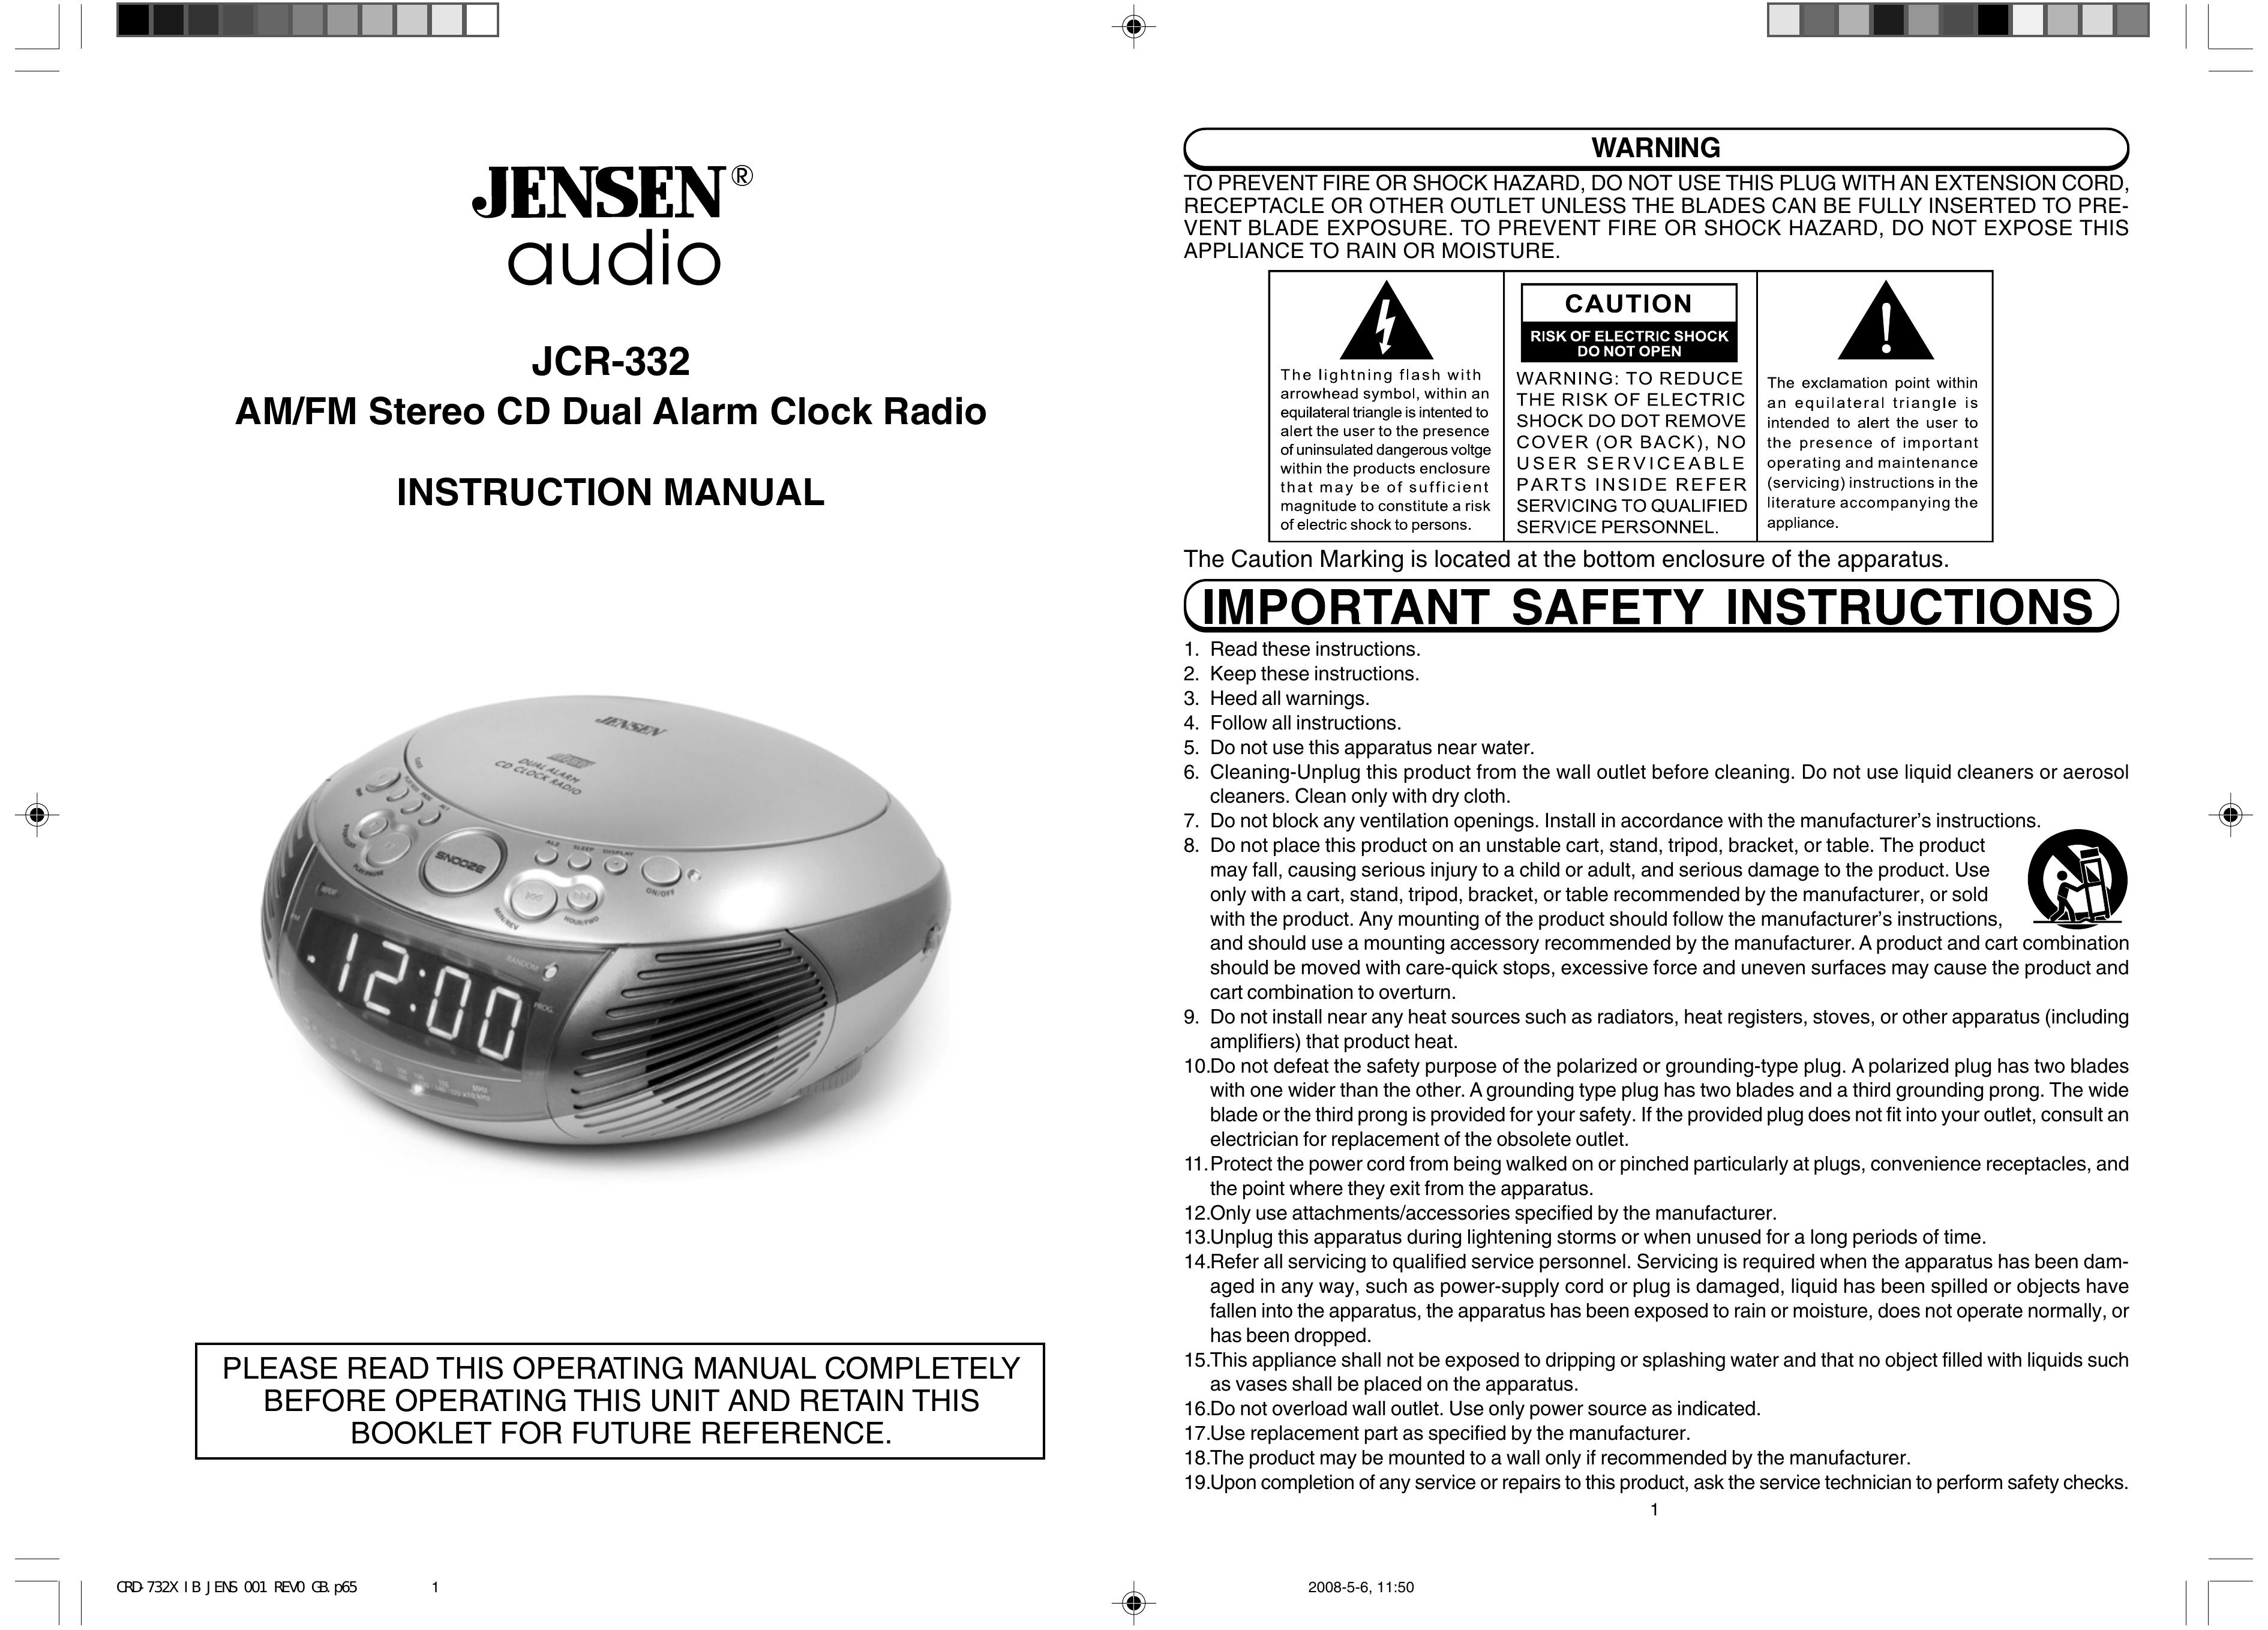 Jensen JCR-332 Clock Radio User Manual